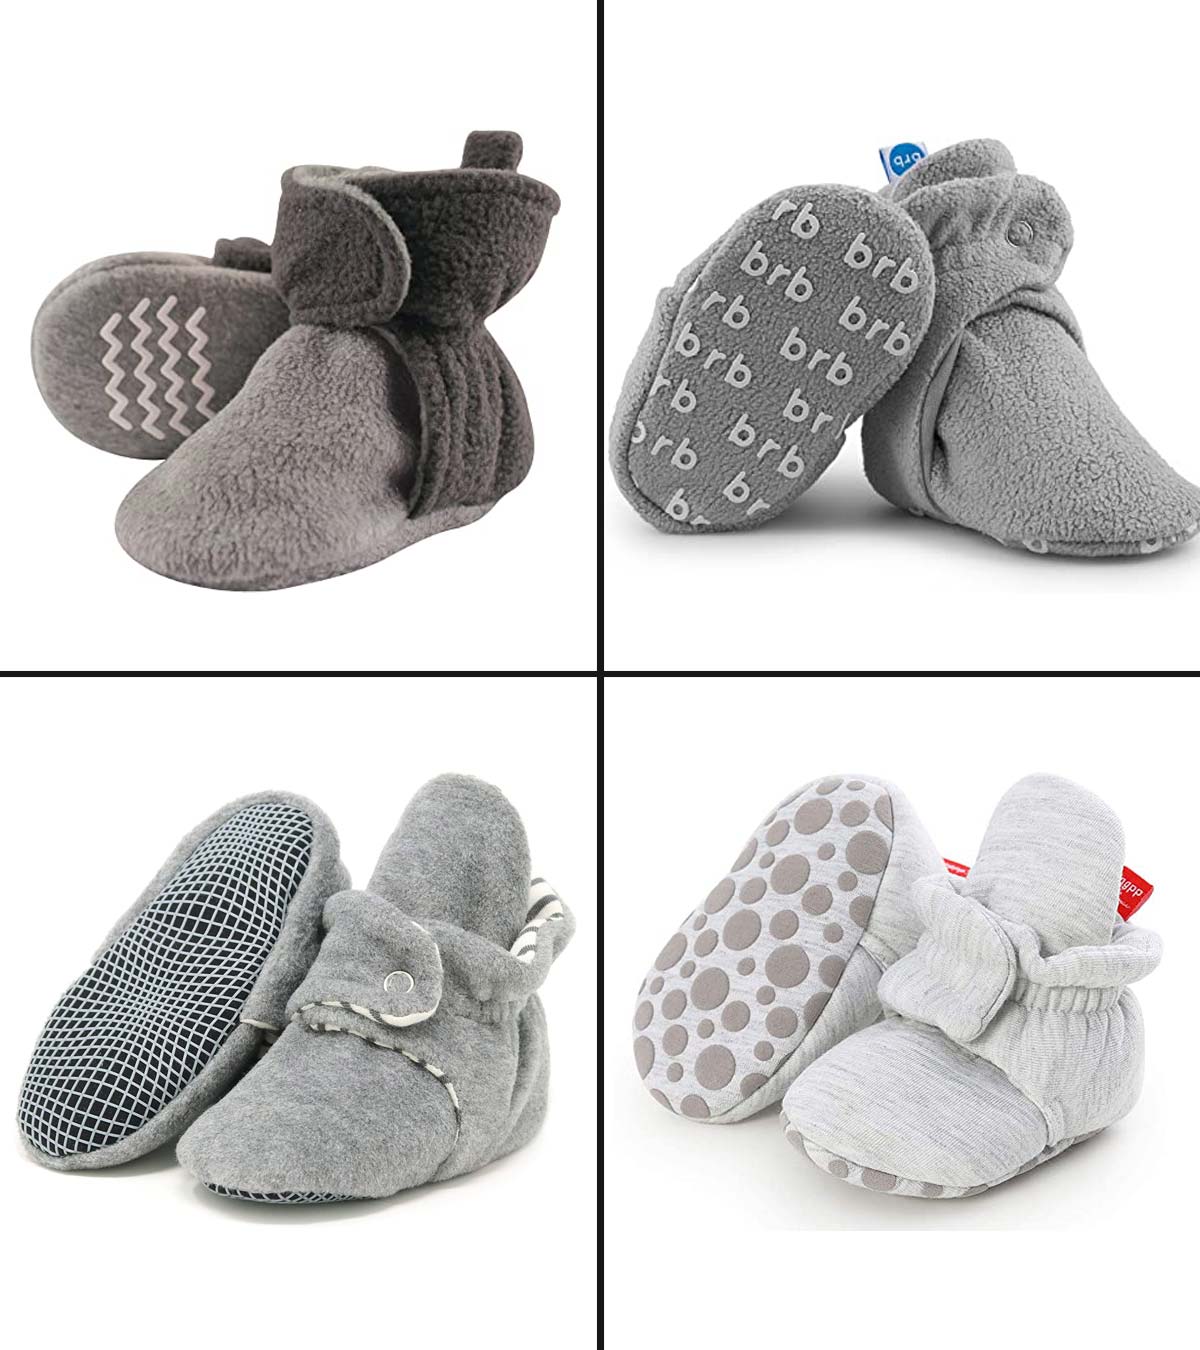 Hsnikabe Newborn Baby Boy Girl Booties Fleece Cozy Non Skid Infant Slippers Winter Warm Socks Crib Shoes 